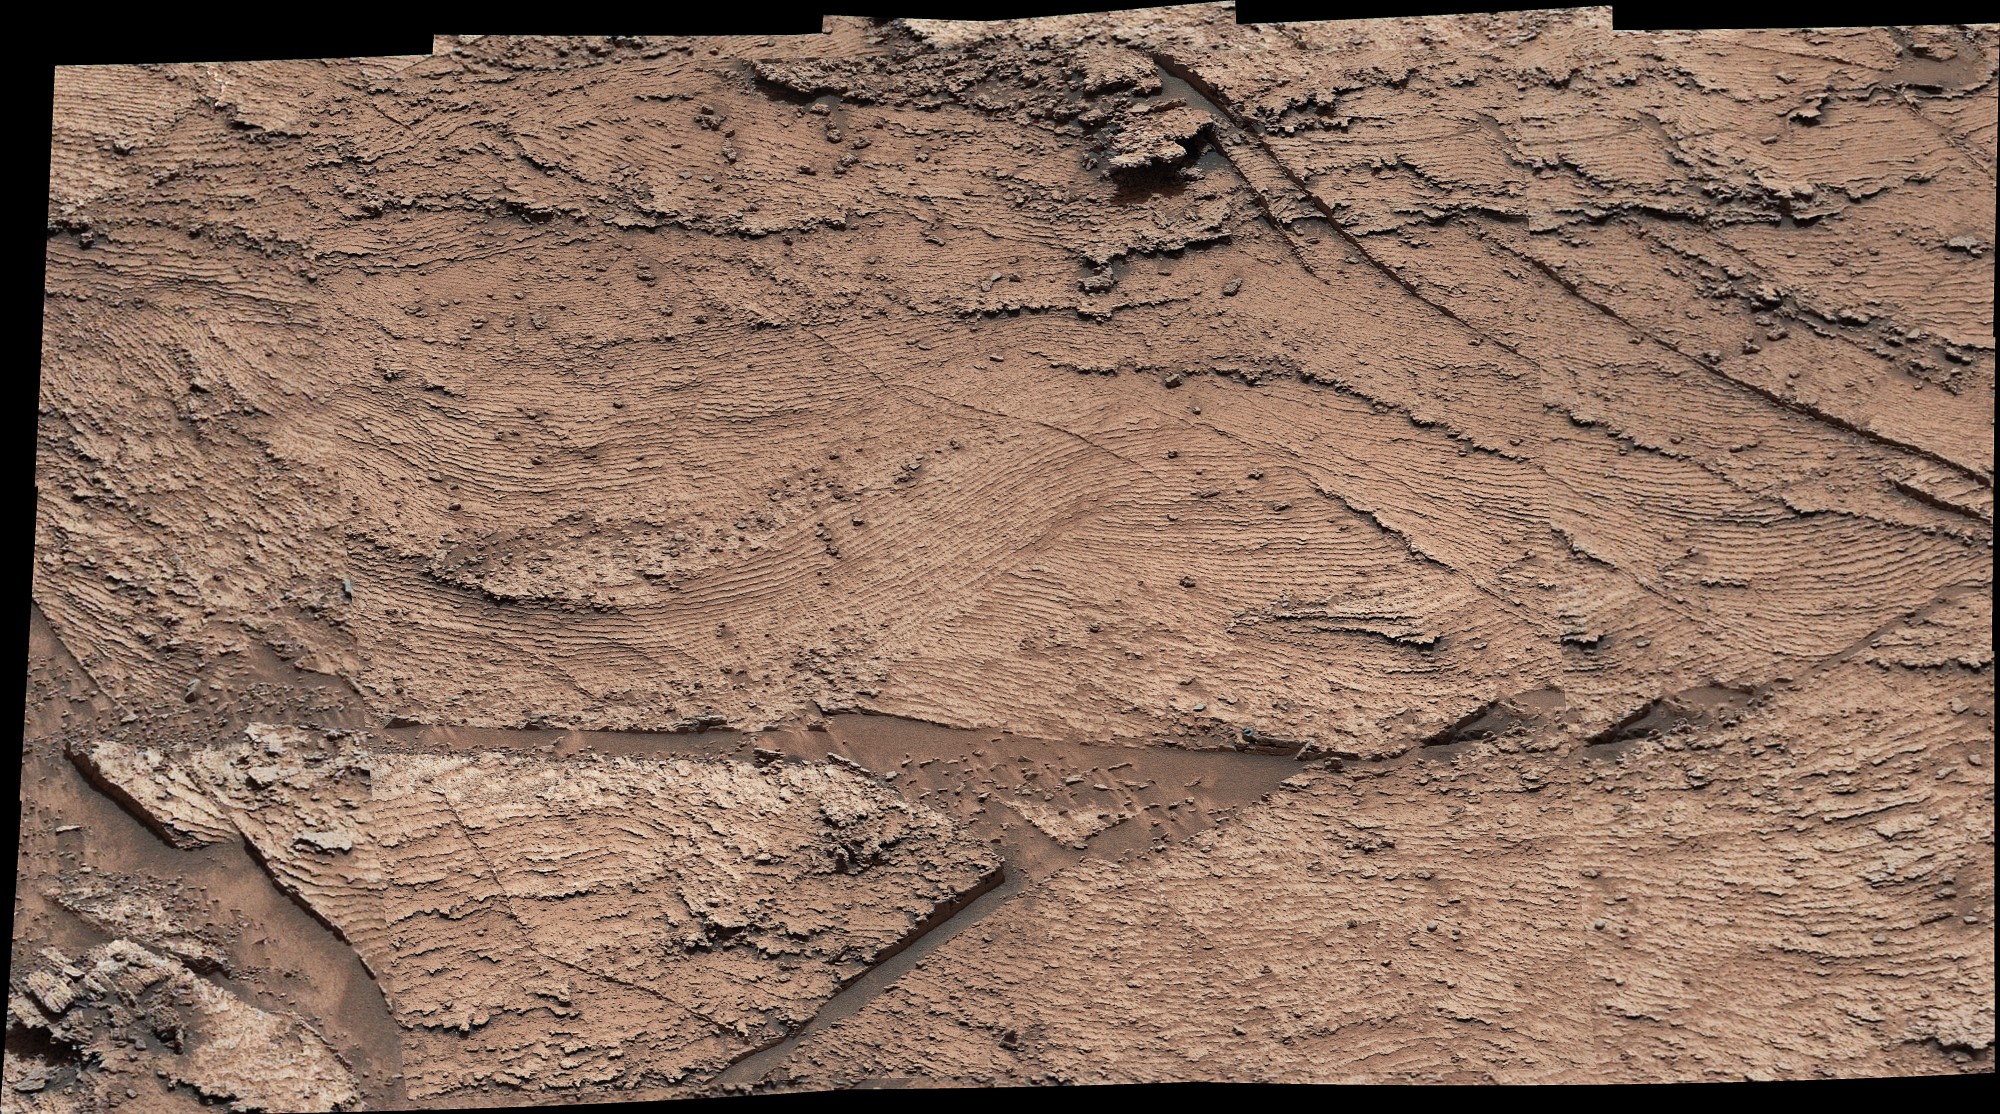 rock layers on mars